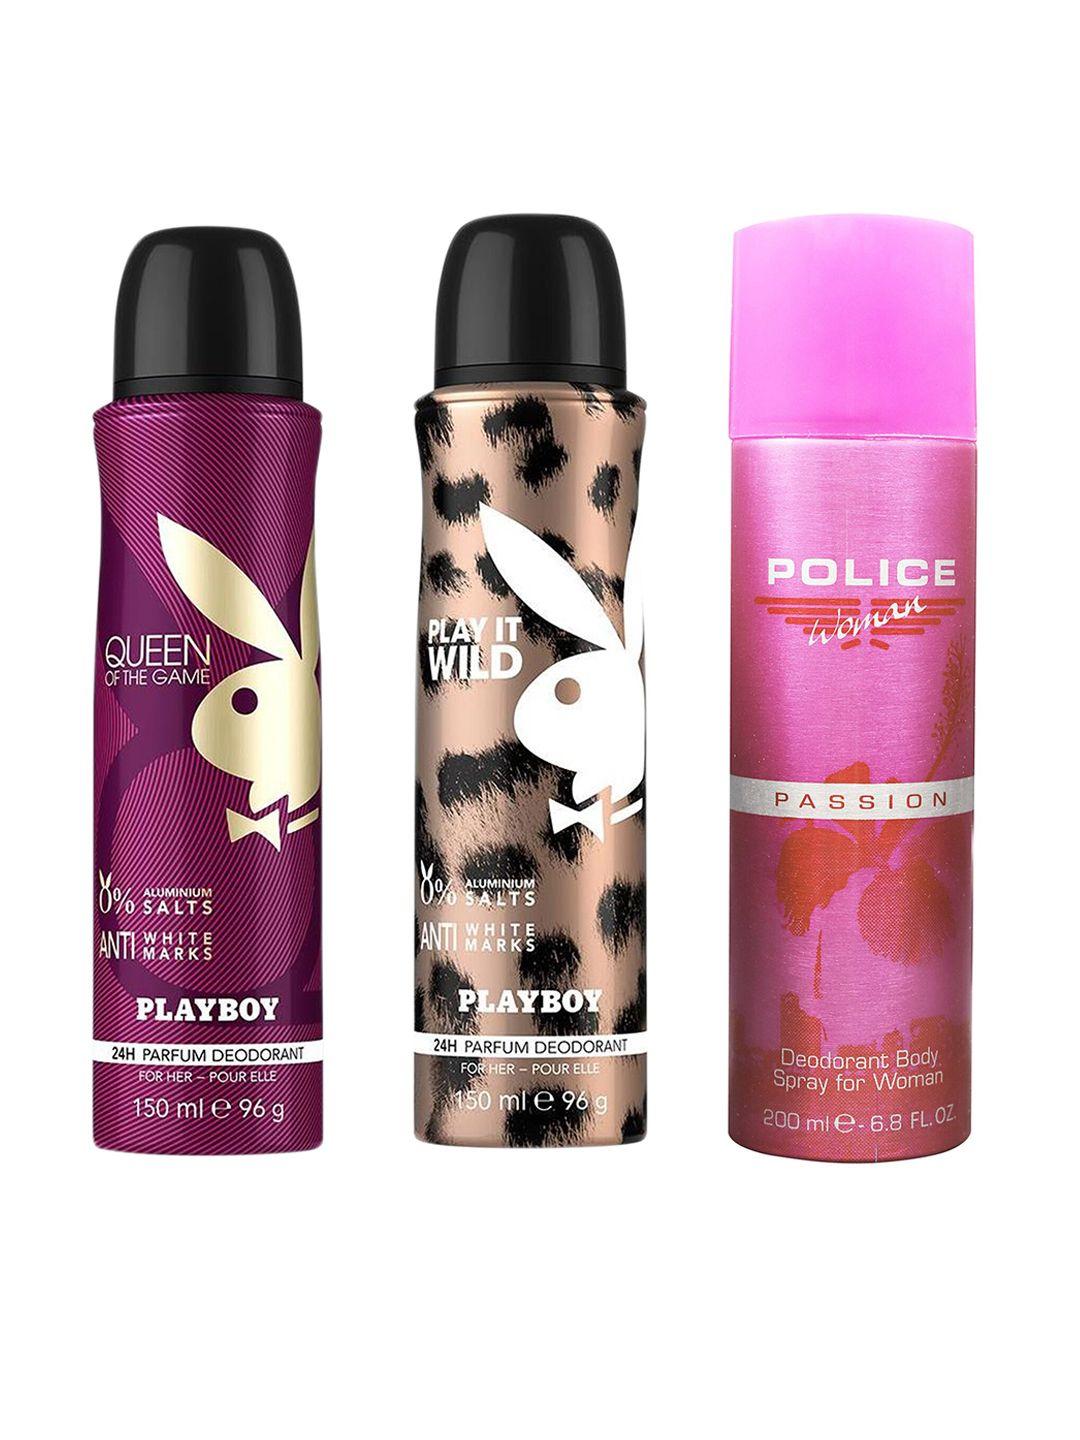 playboy set of 3 parfum deodorants - queen of the game, play it wild & policepassion 500ml